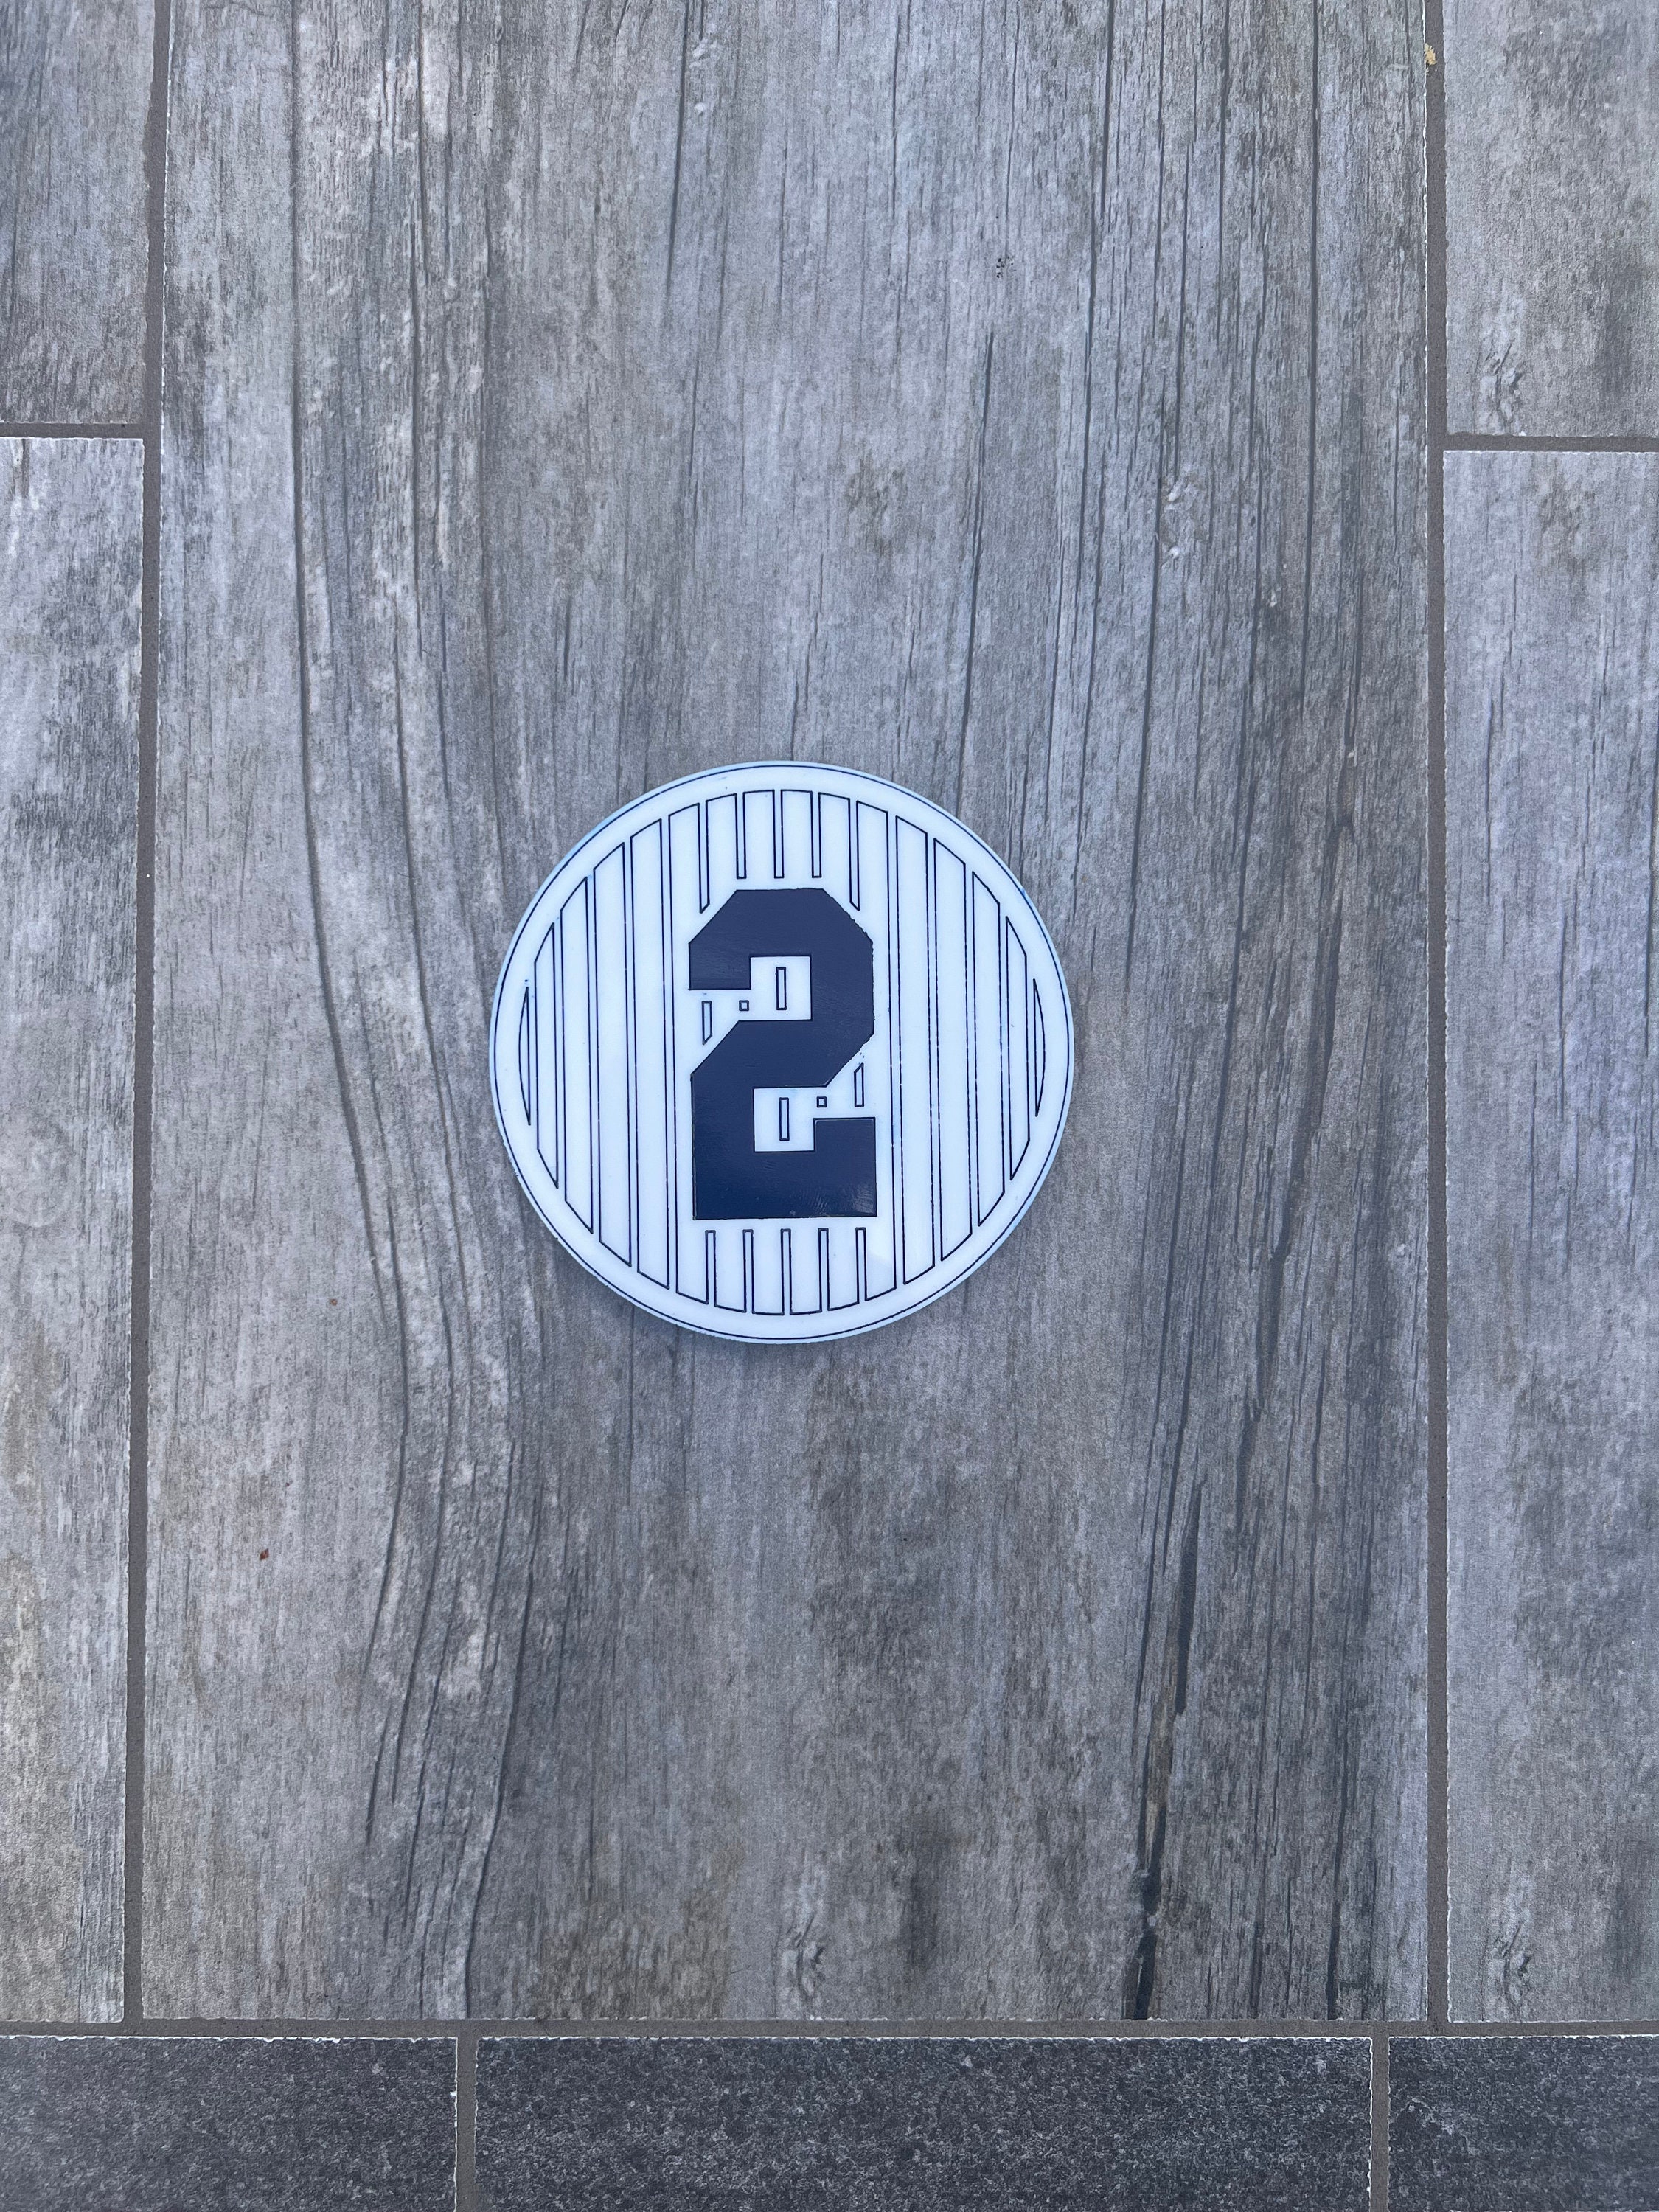 Yankees retired numbers vintage poster – LOST DOG Art & Frame